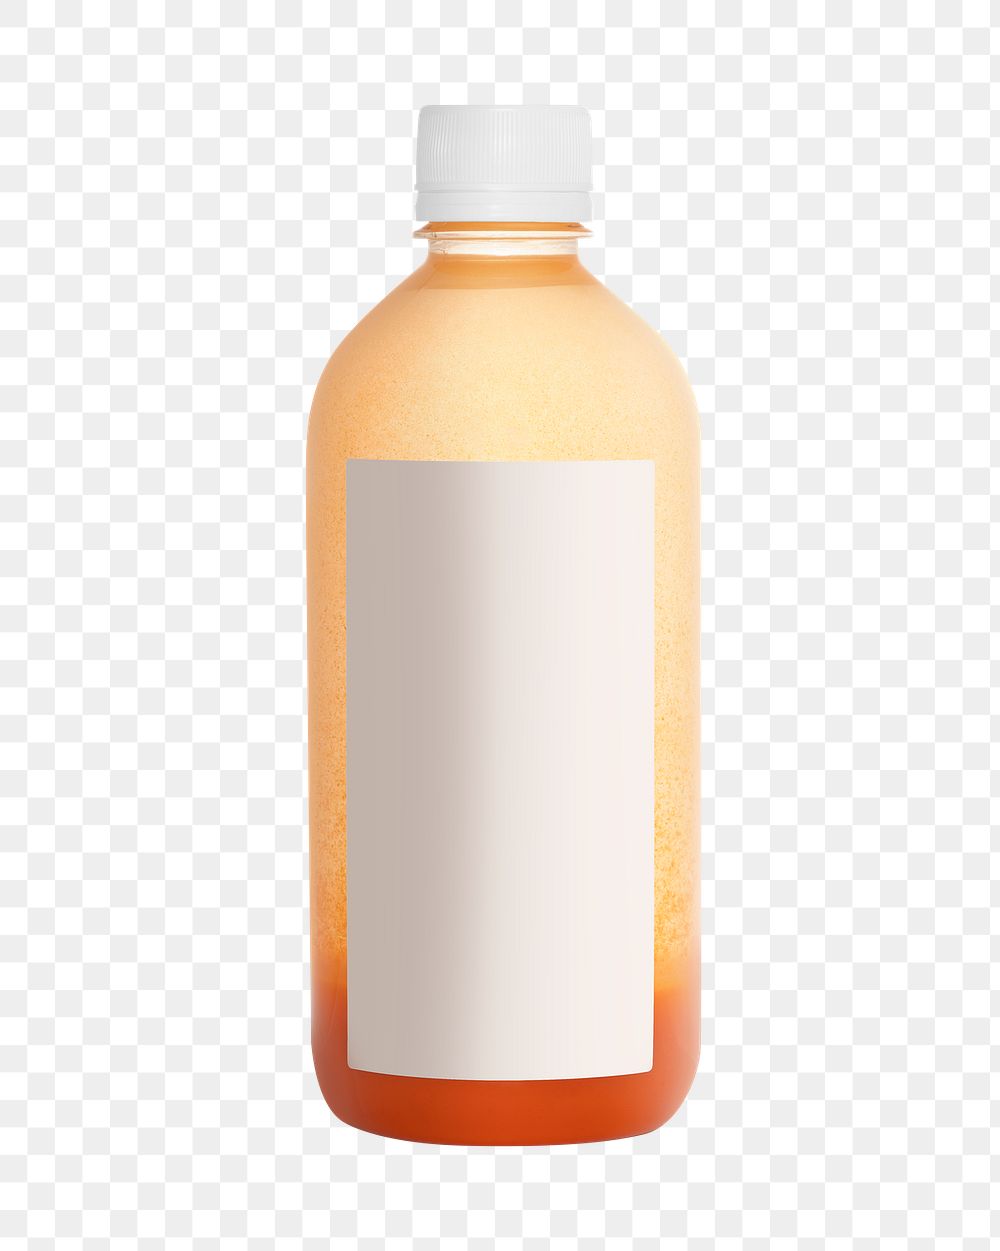 Fruit juice bottle png, isolated object, transparent background